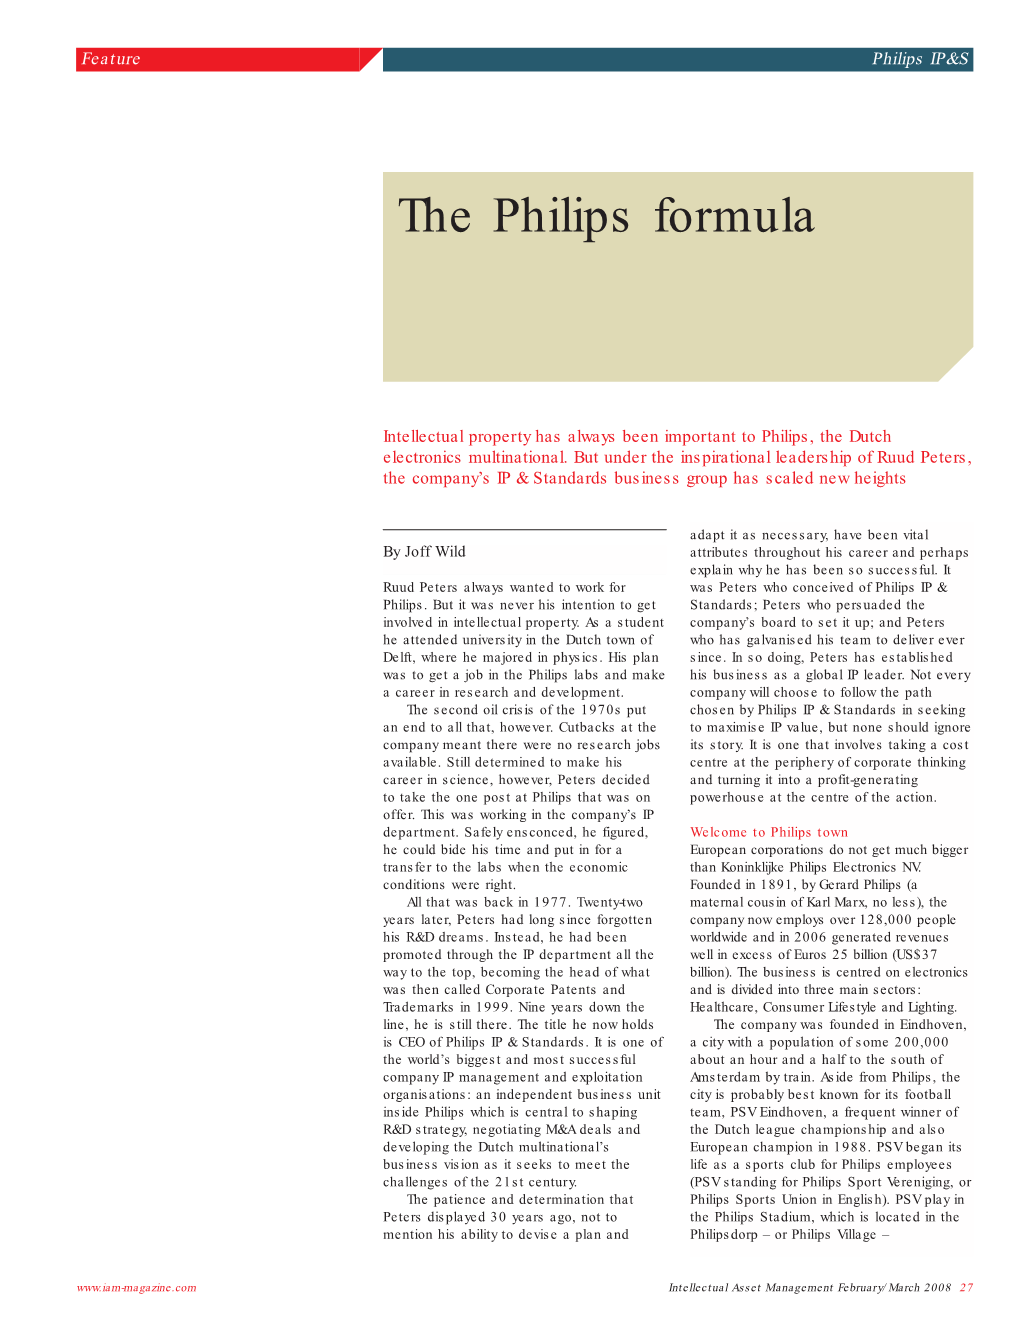 The Philips Formula